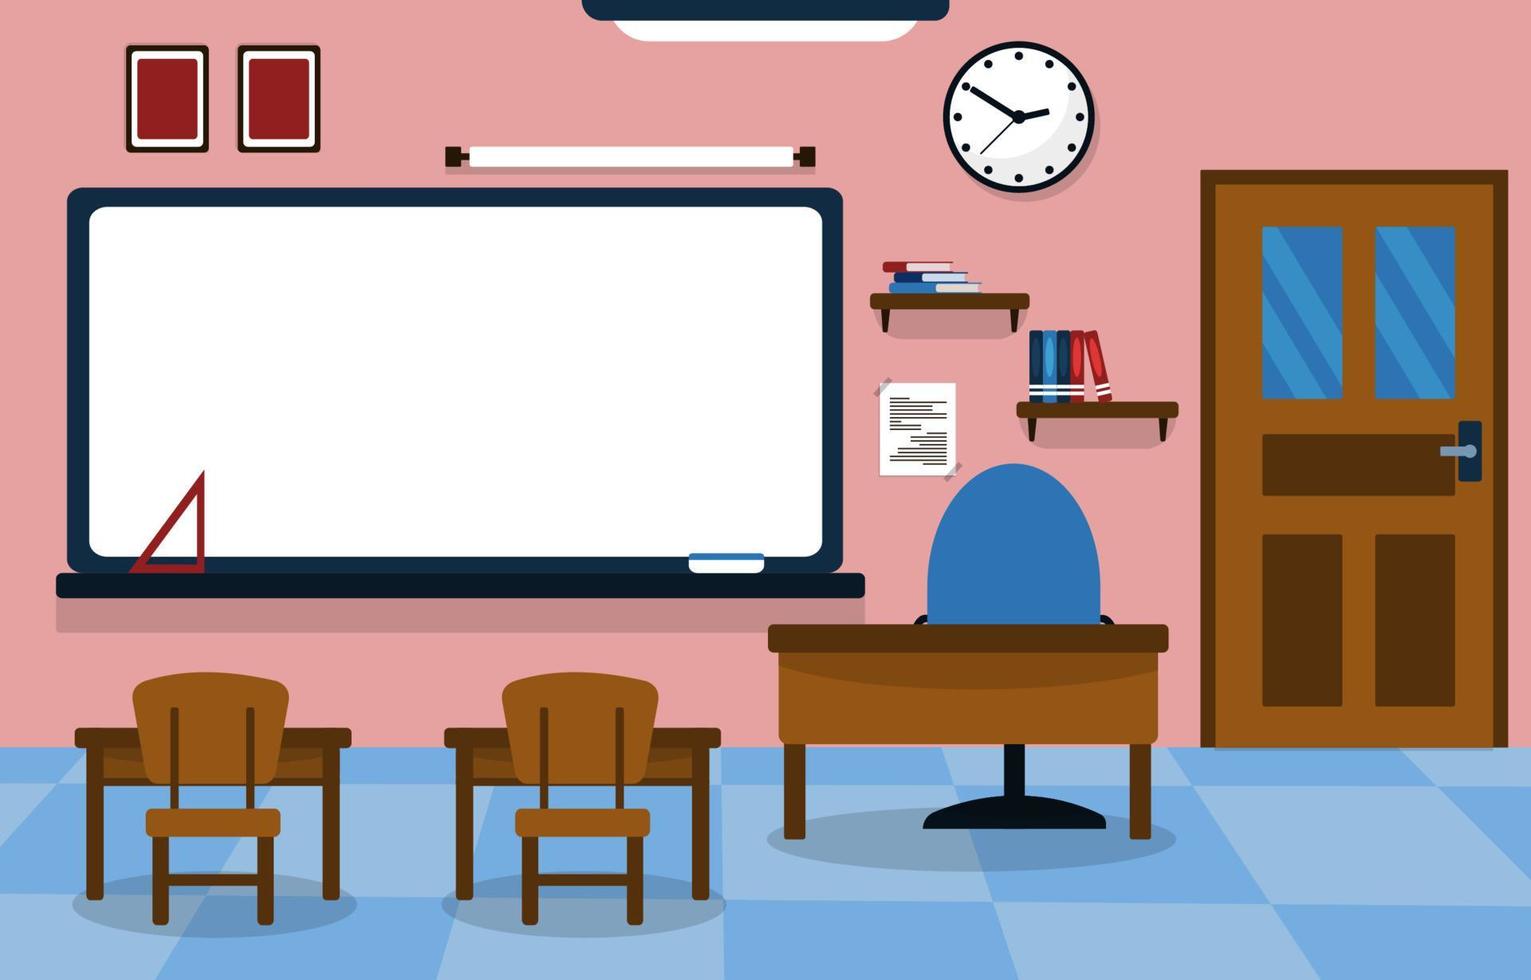 Class School Nobody Classroom Whiteboard Table Chair Education Illustration vector